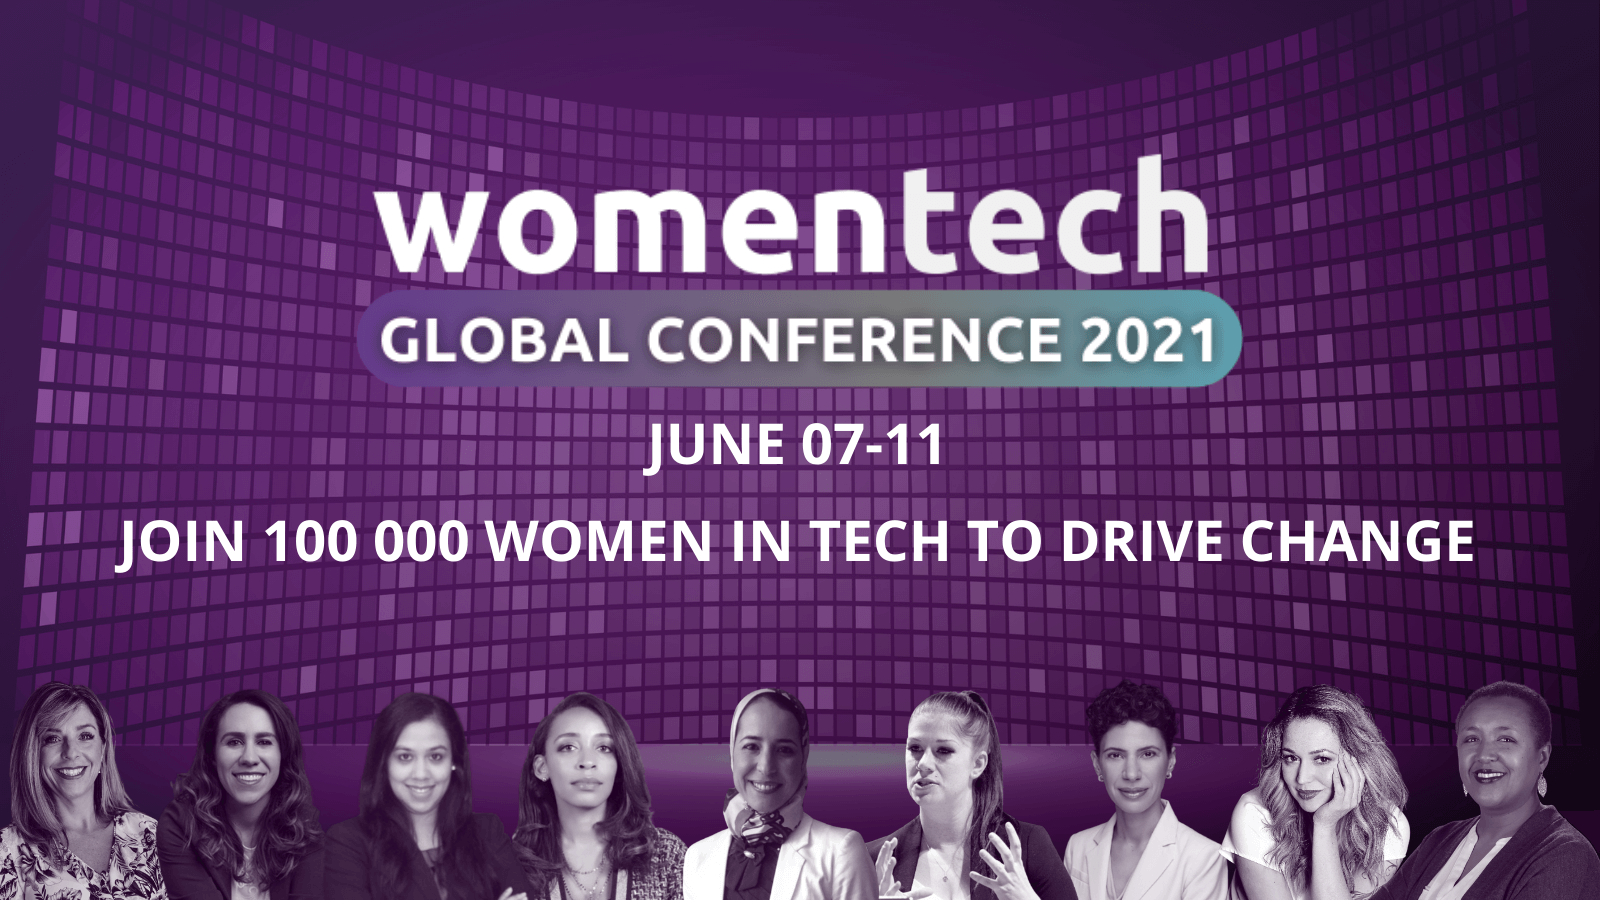 Women in Tech Global Conference 2022